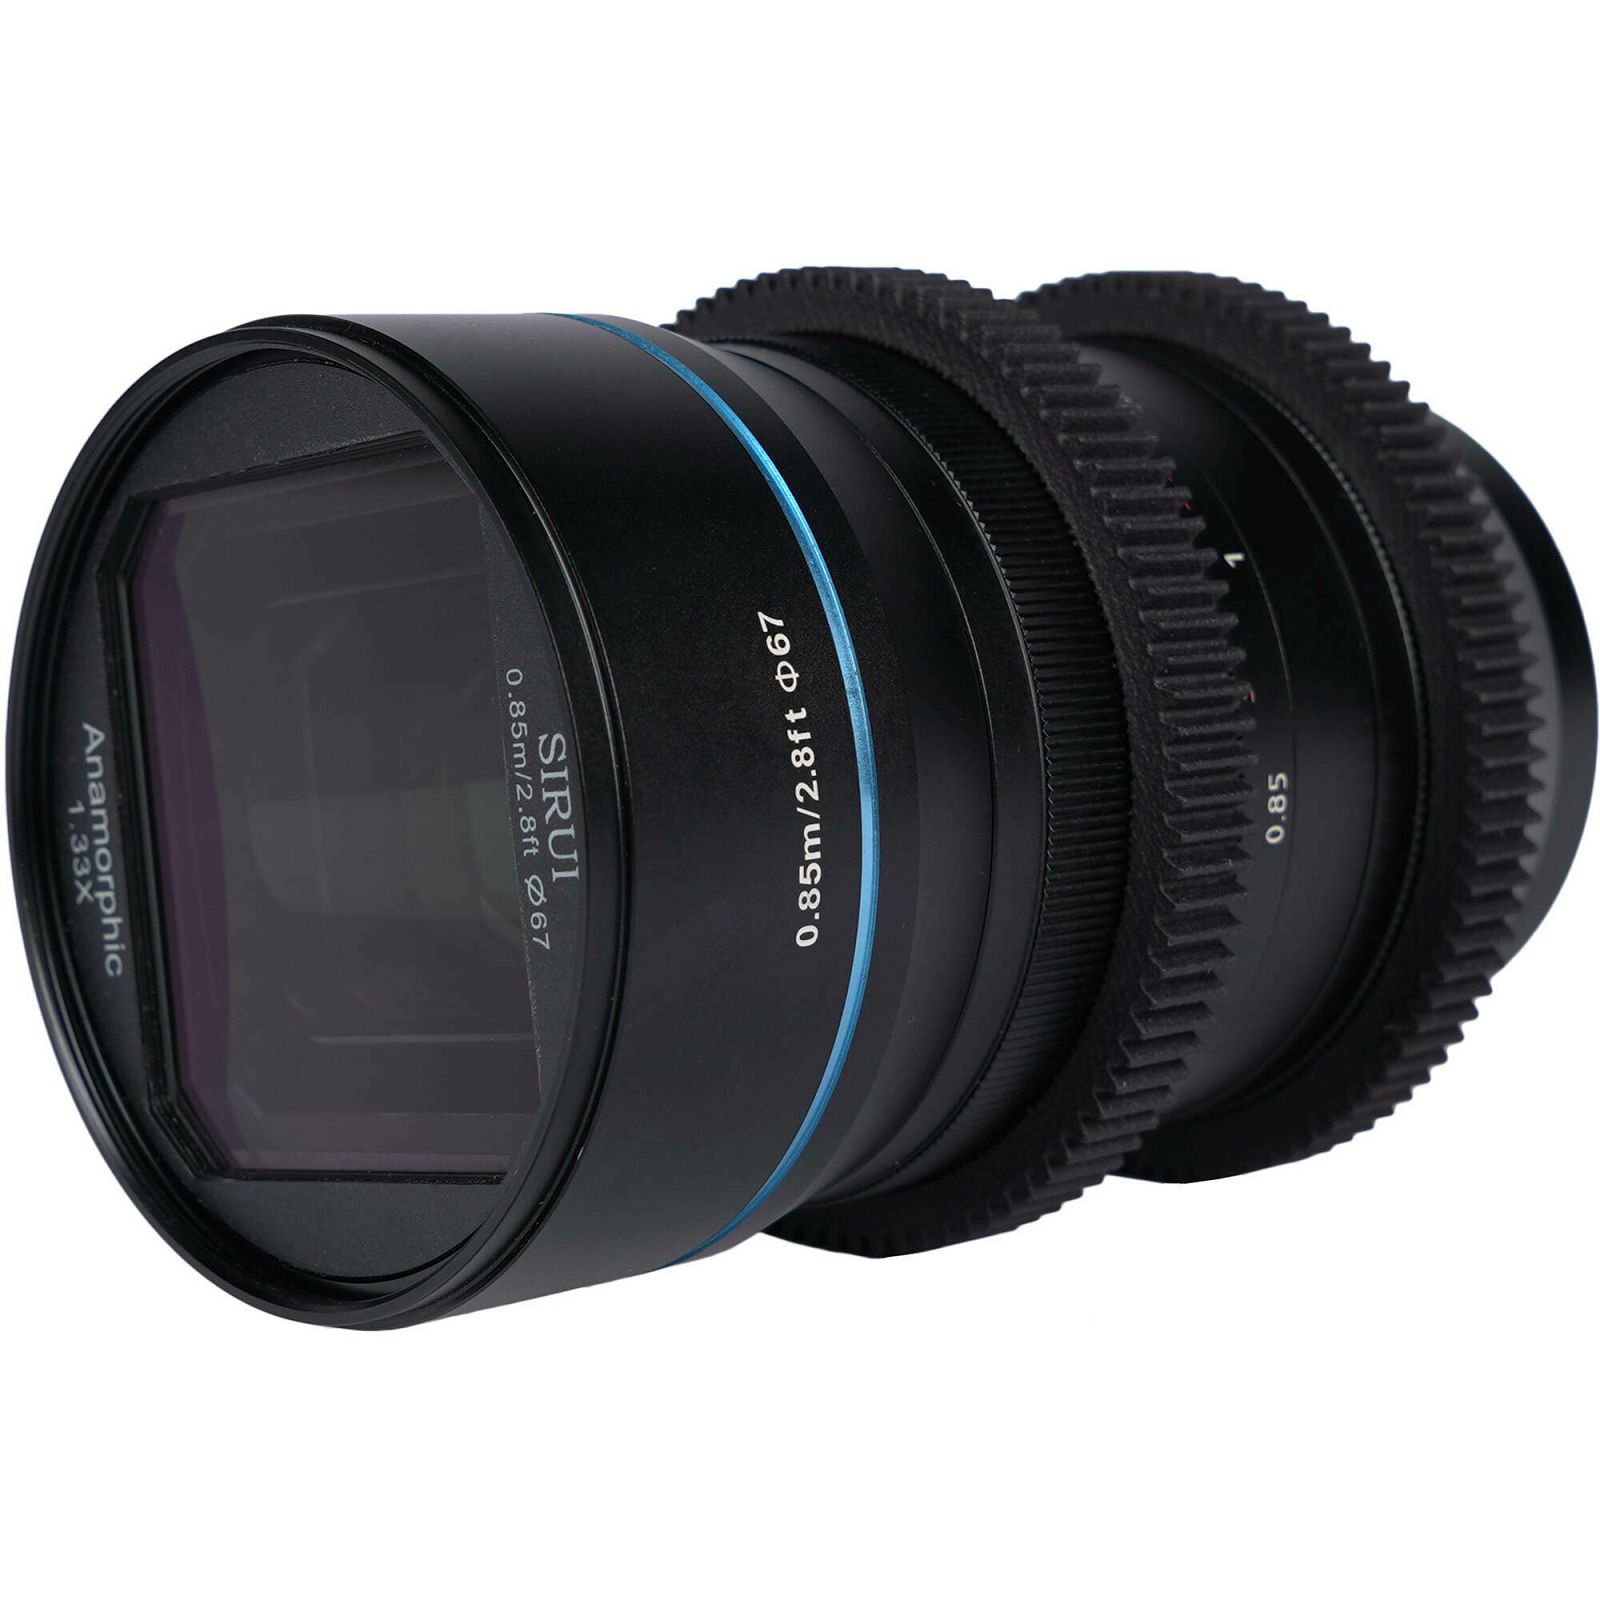 Sirui 35mm f/1.8 1.33x Anamorphic objektiv za Olympus Panasonic MFT micro4/3" (SR35-M)